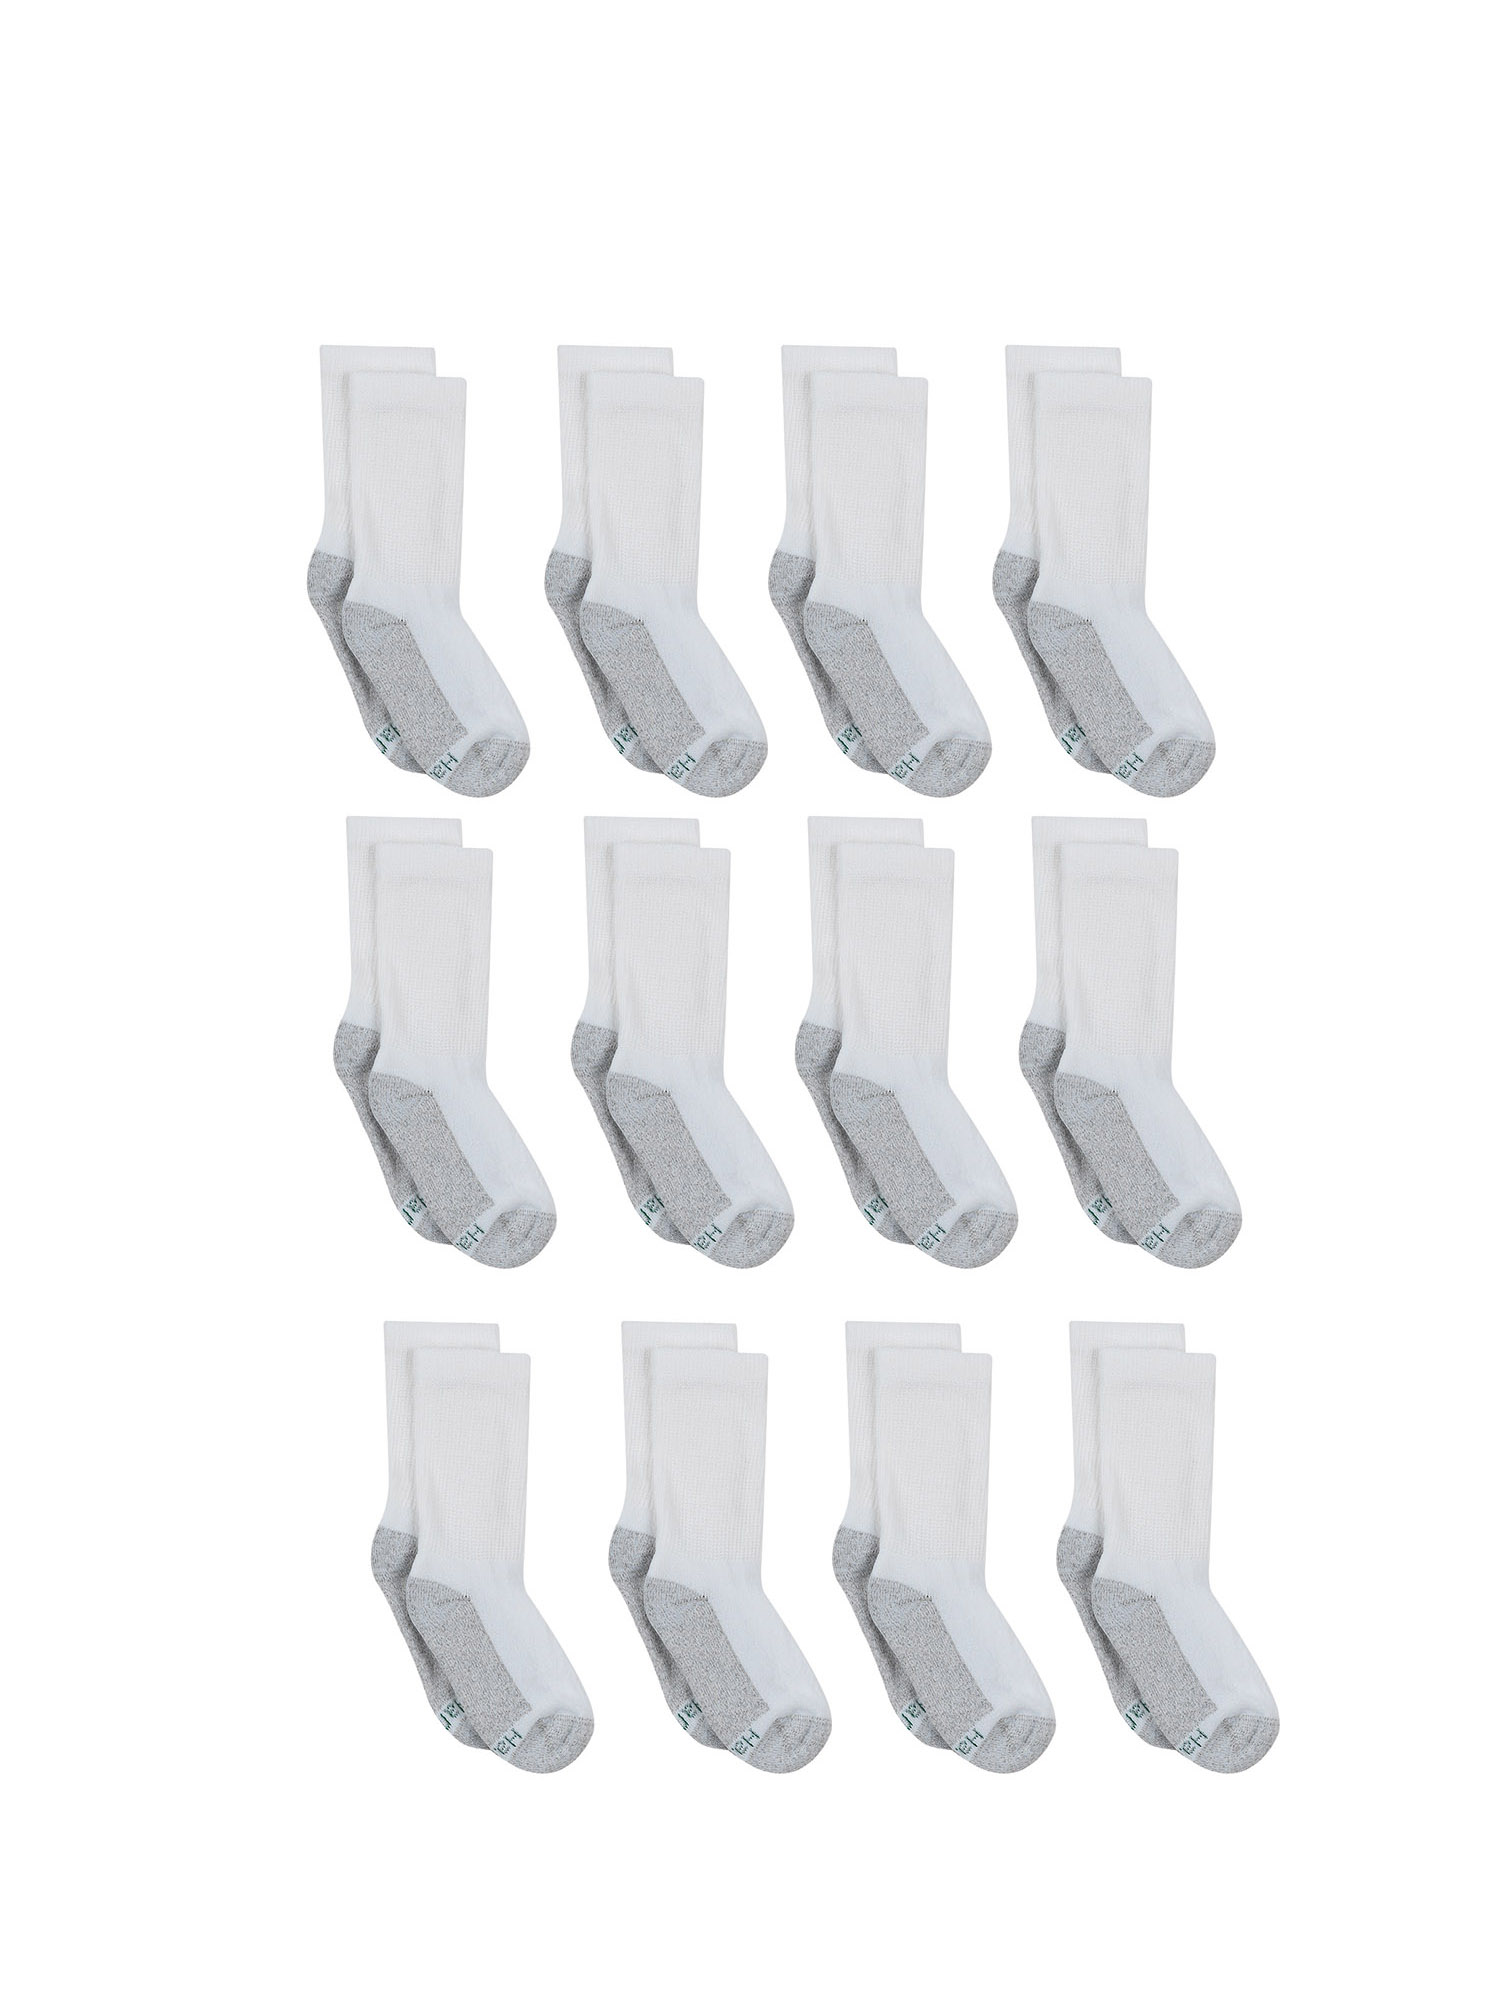 Hanes Boys' Crew Socks, 12 Pack - image 1 of 5